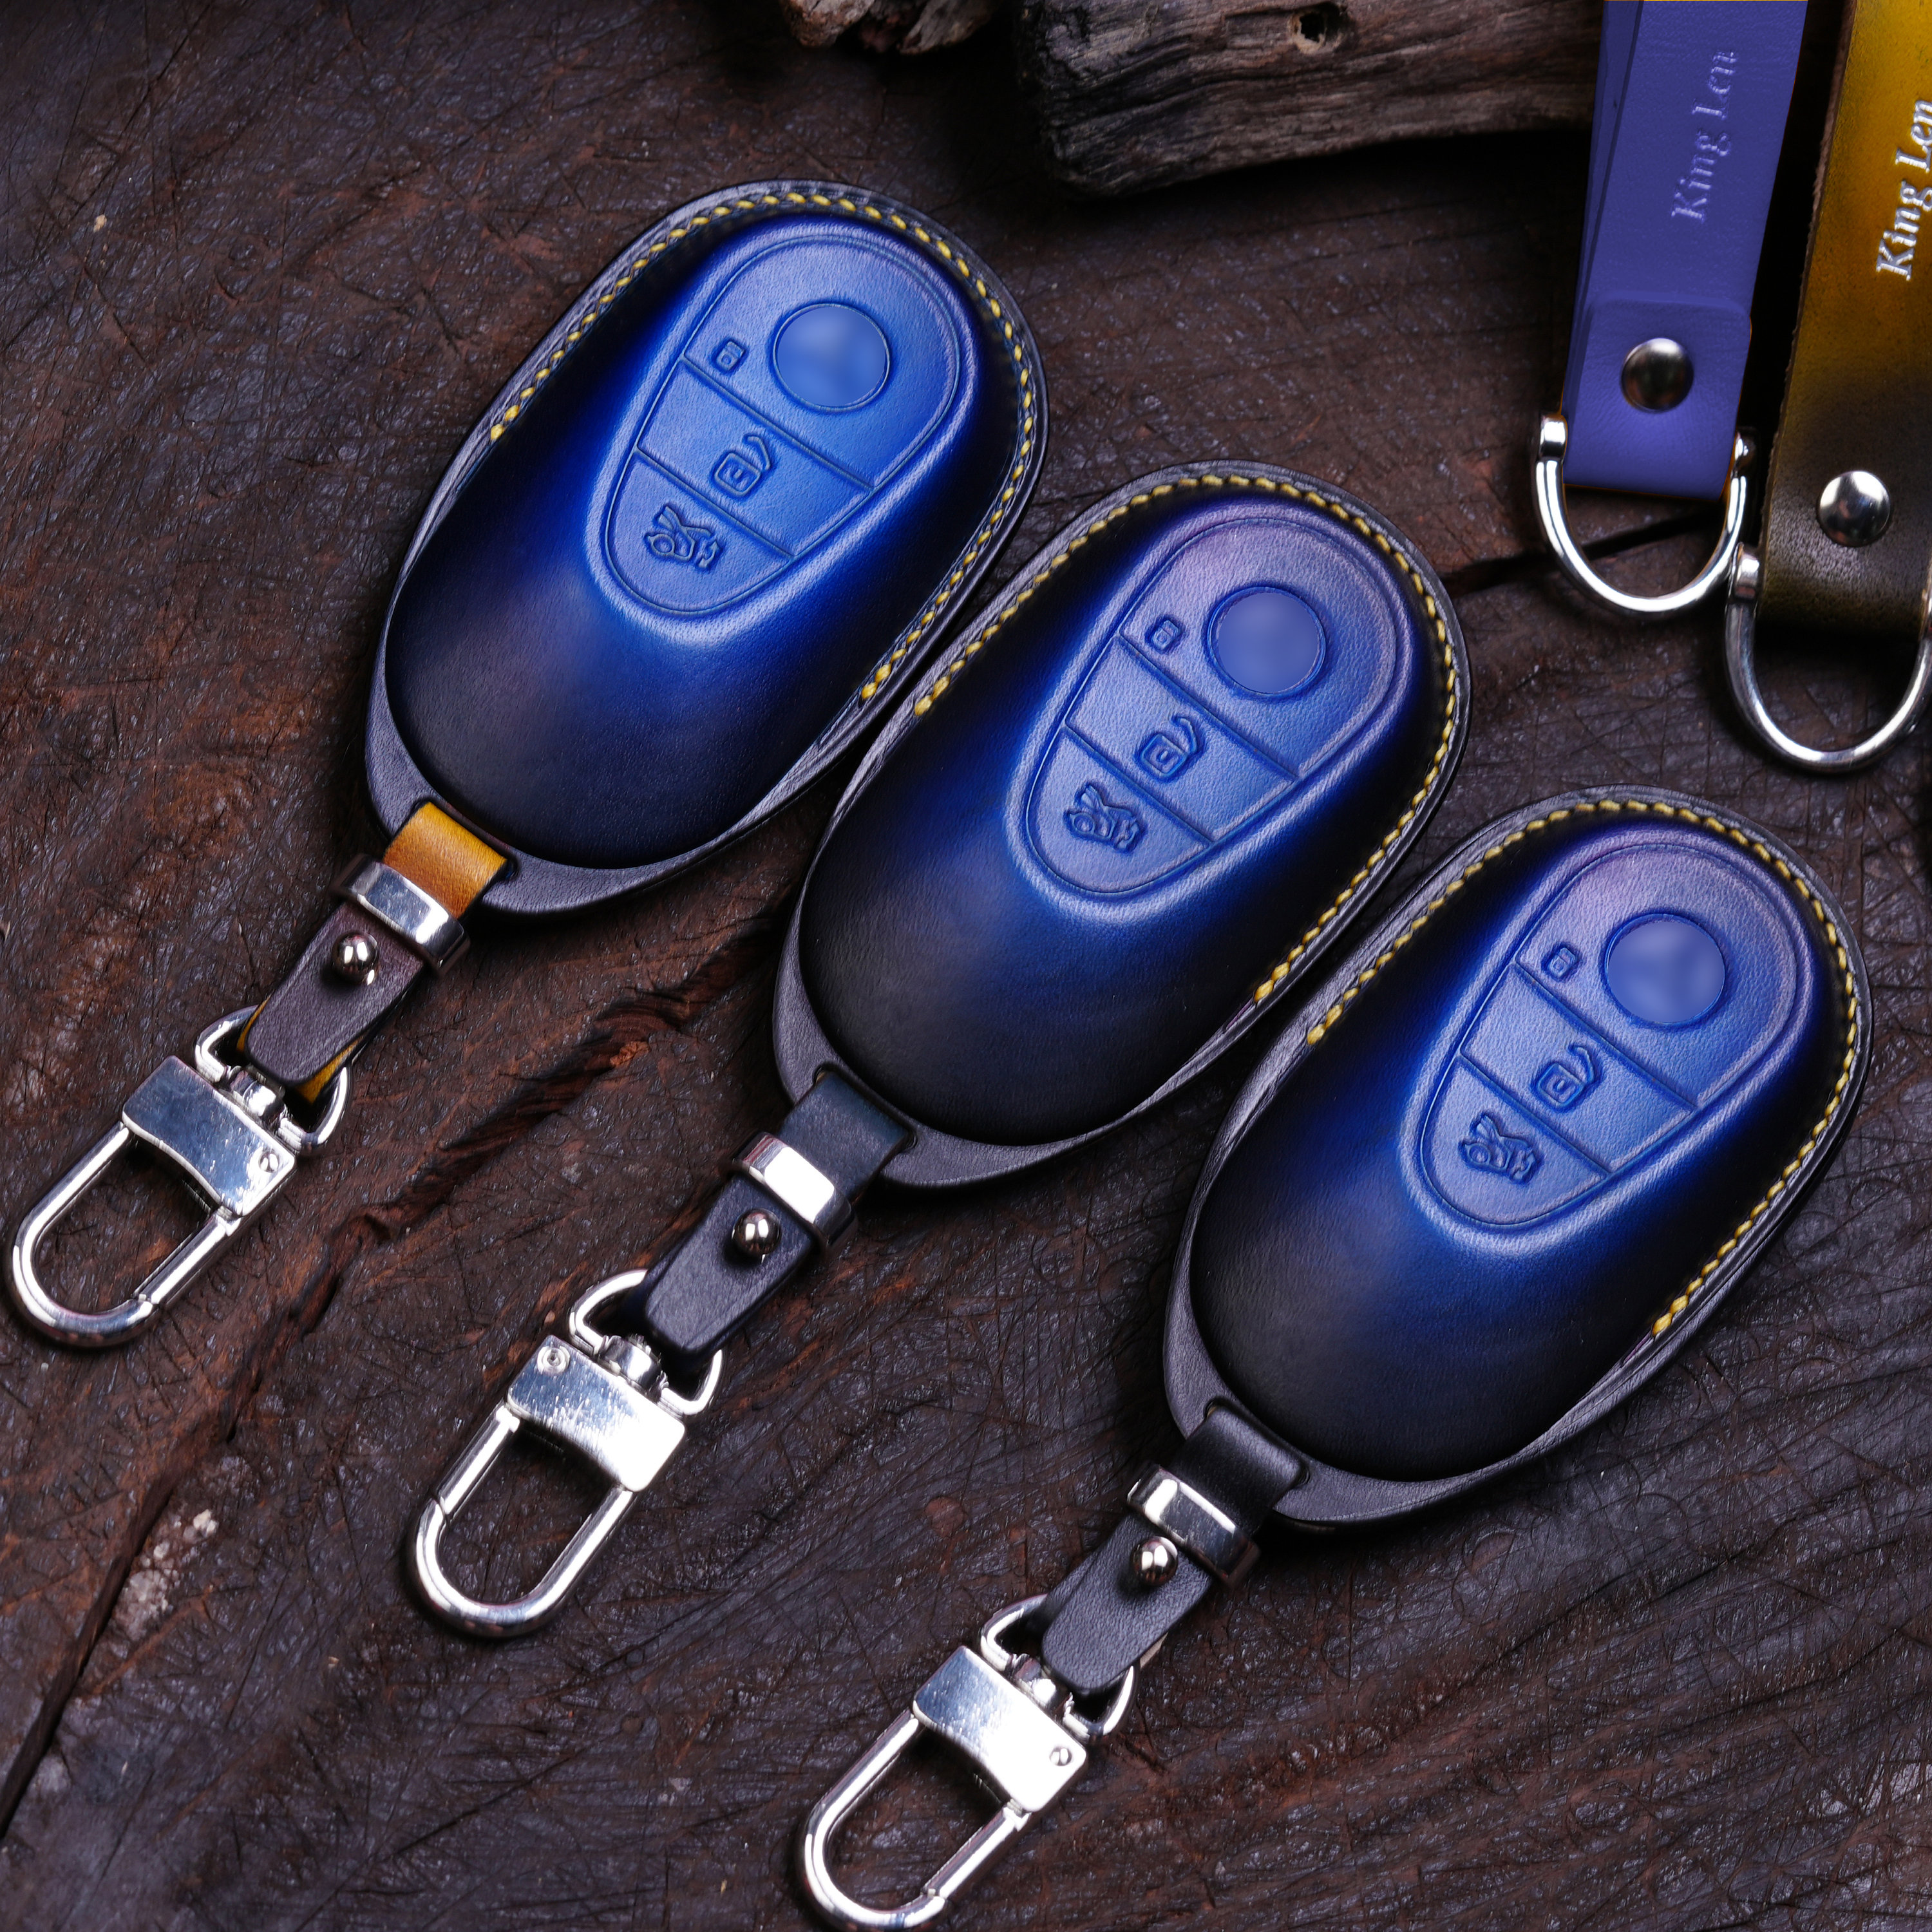 Premium leather key cover for Mercedes-Benz keys incl. keyring hook +  leather keychain (LEK66-M9)